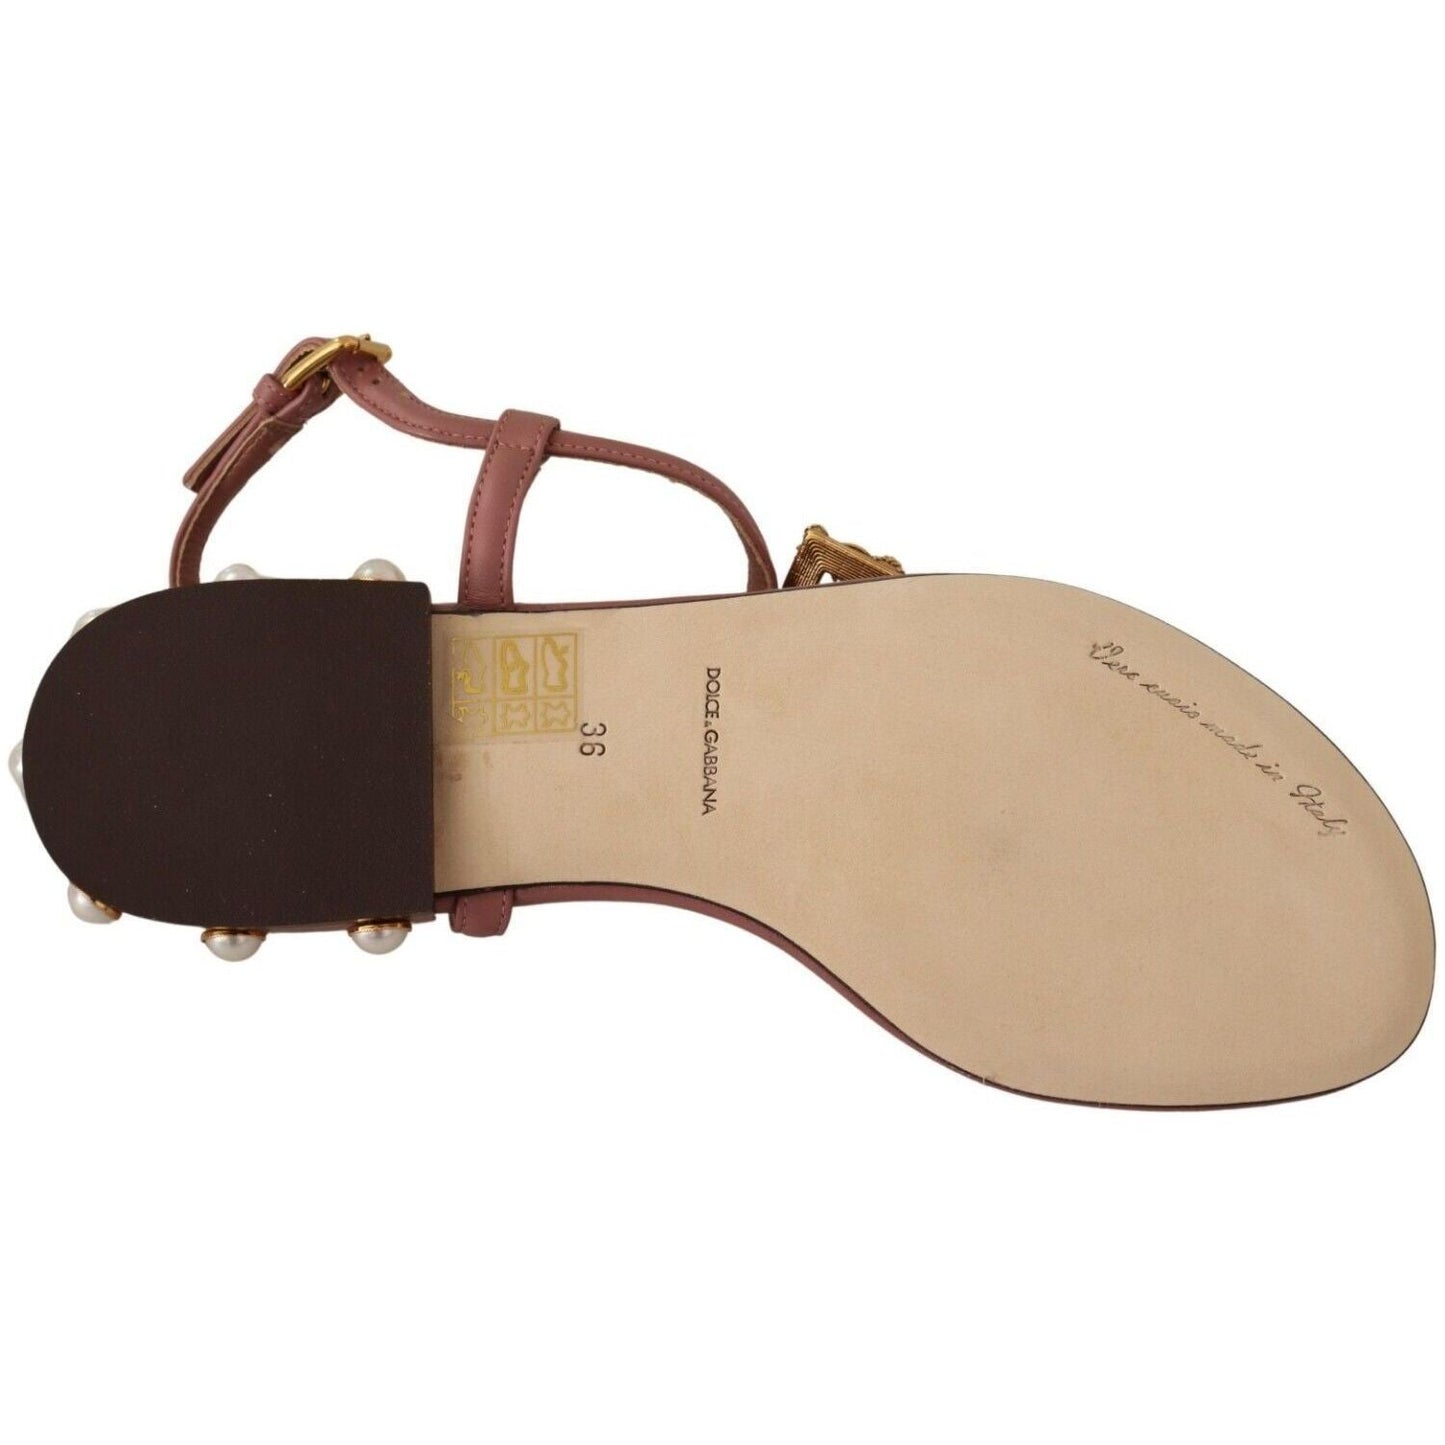 Dolce & Gabbana Elegant Pink Leather Ankle Strap Sandals Sandals pink-dg-amore-logo-leather-sandals-shoes